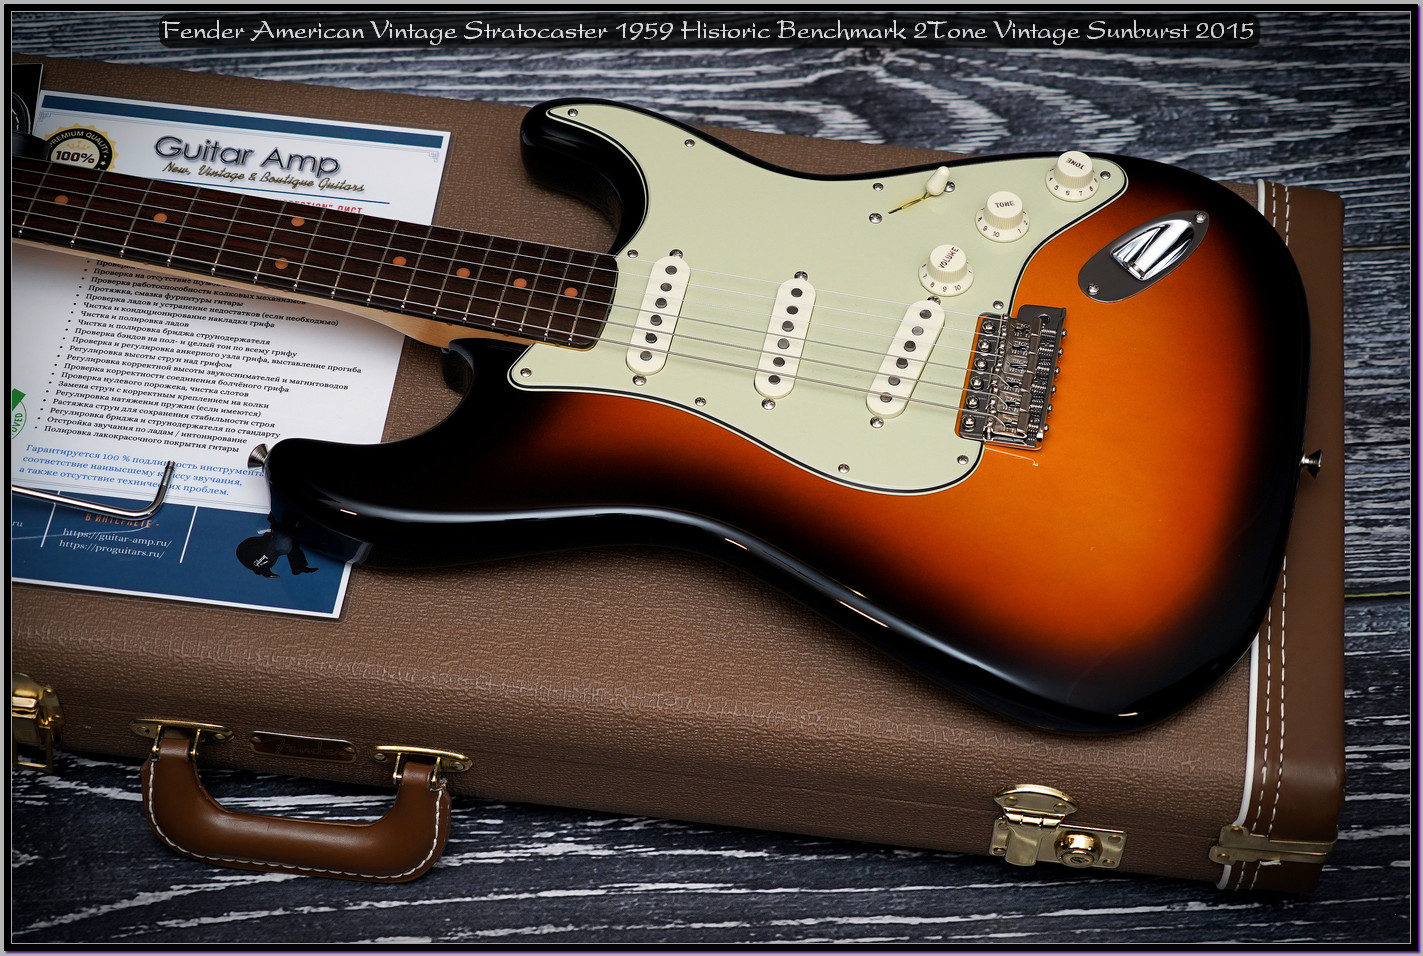 Fender American Vintage Stratocaster 1959 Historic Benchmark 2Tone Vintage Sunburst 2015 02_x1400.jpg